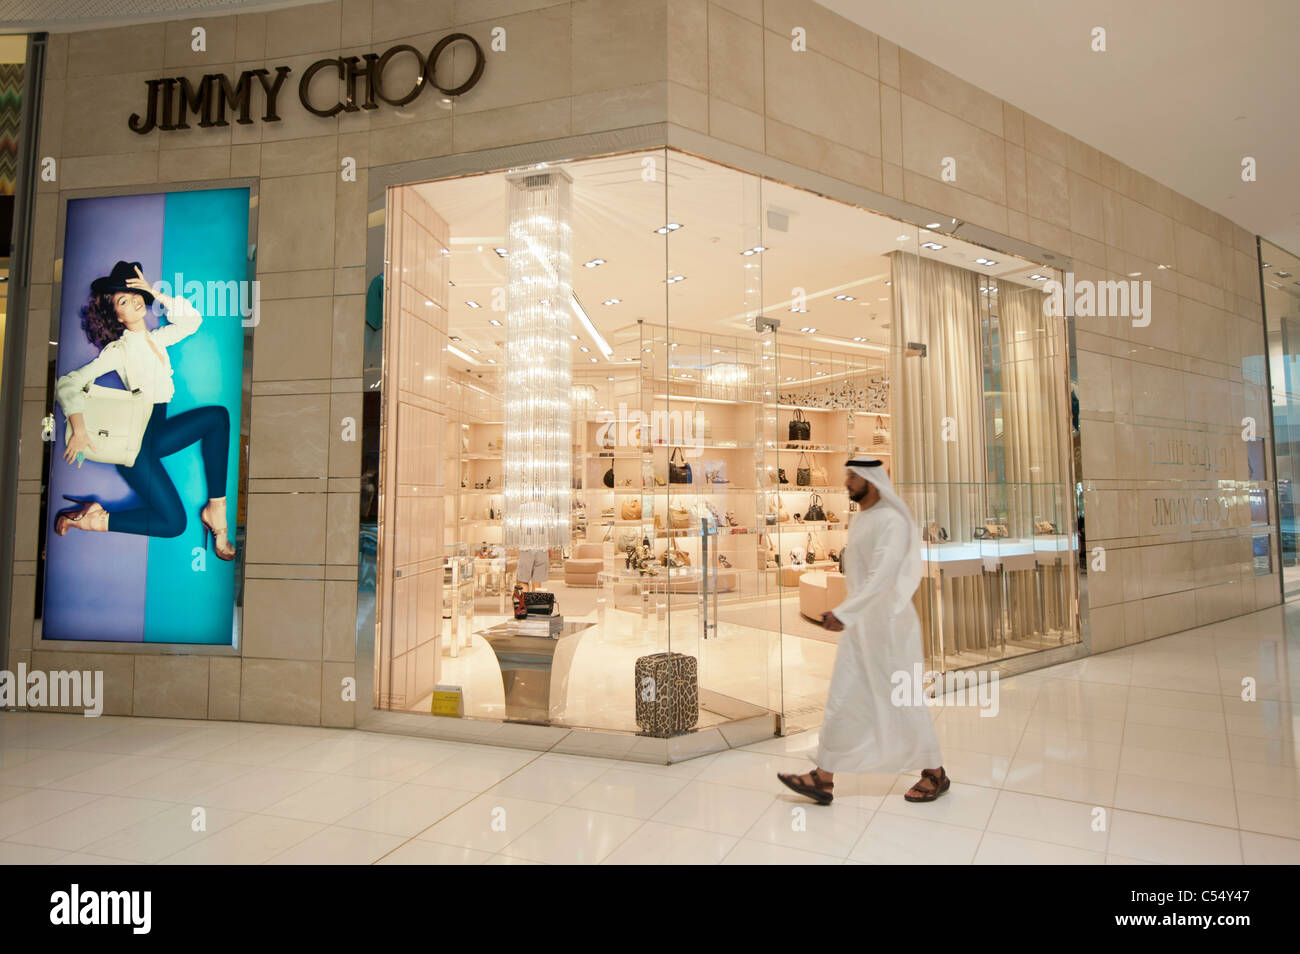 Jimmy Choo speichern n Dubai Mall in Dubai Vereinigte Arabische Emirate VAE Stockfoto